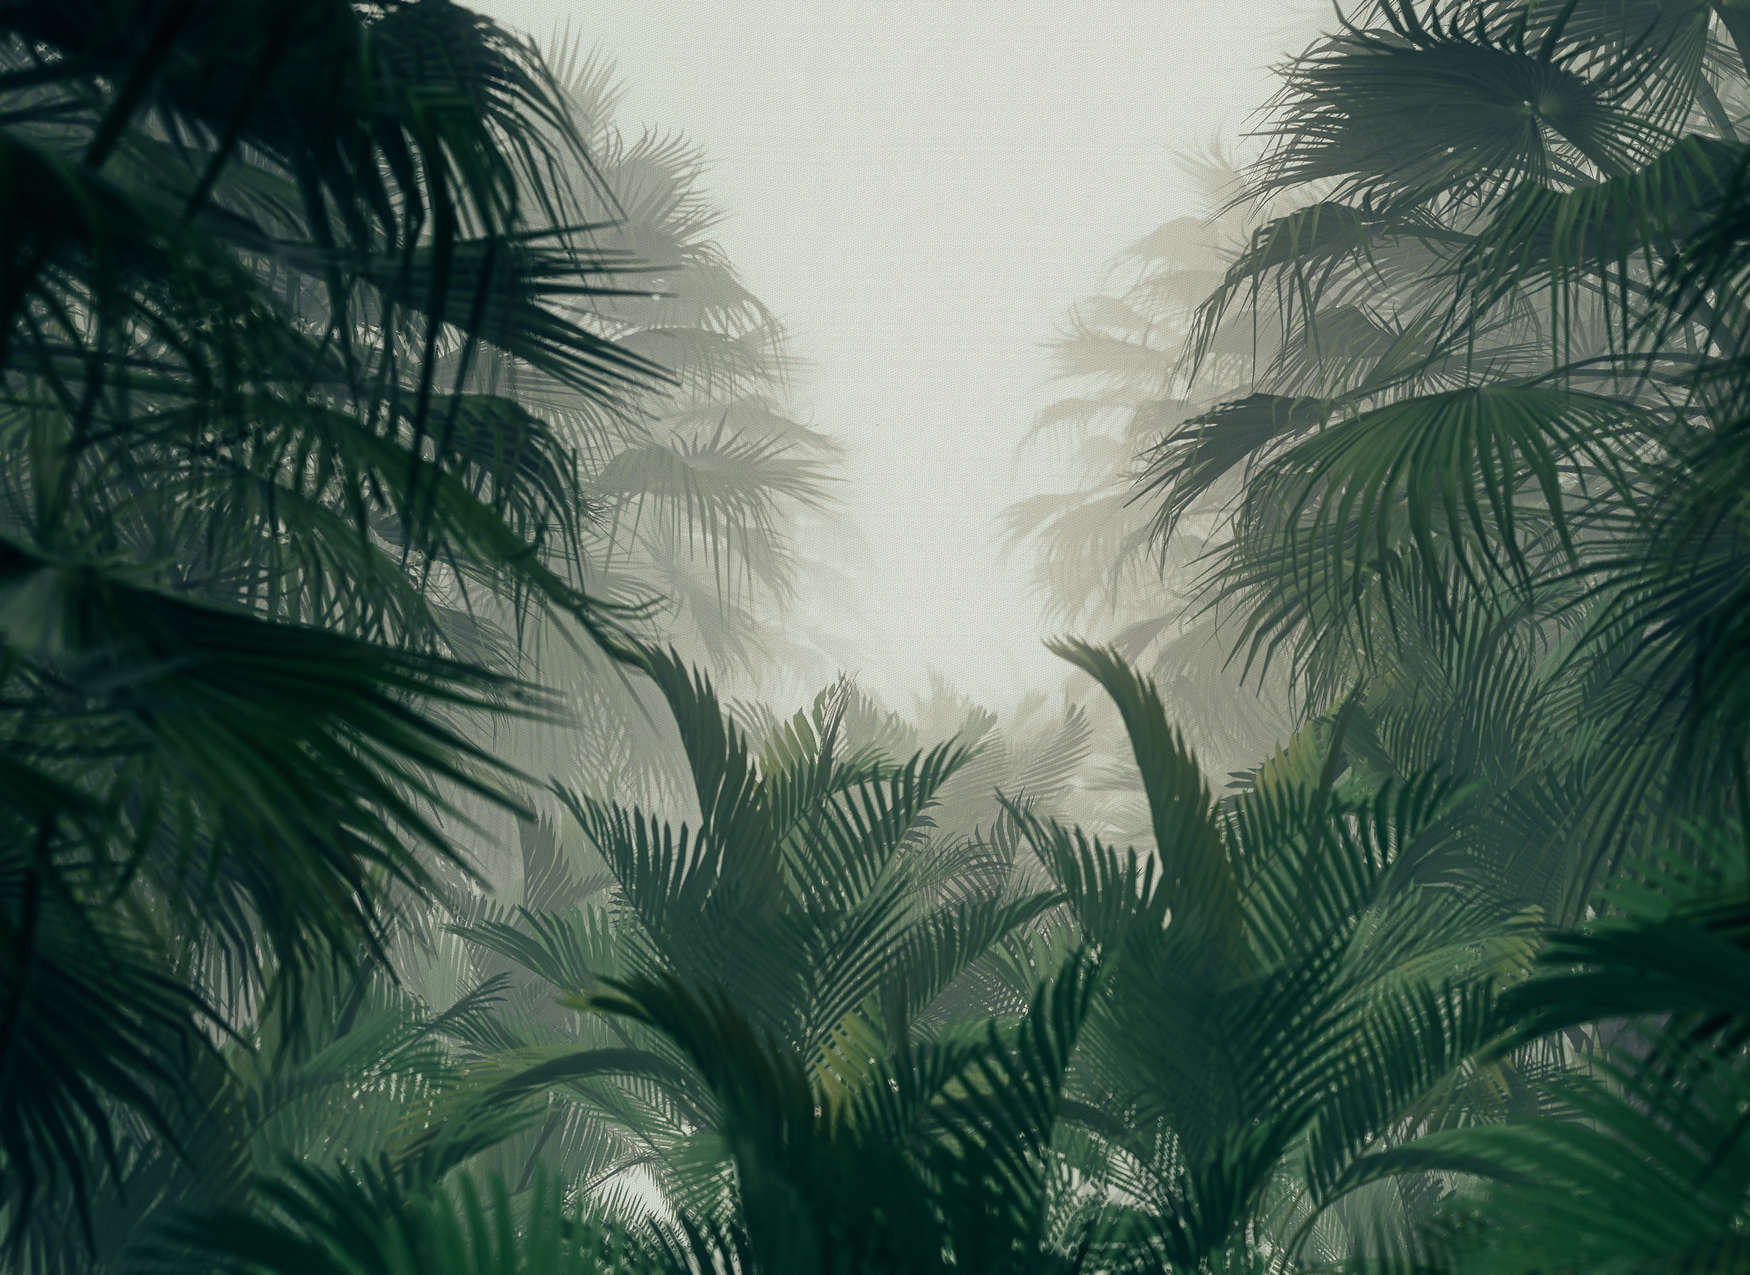             Rainy Season Jungle View Wallpaper - Groen, Grijs
        